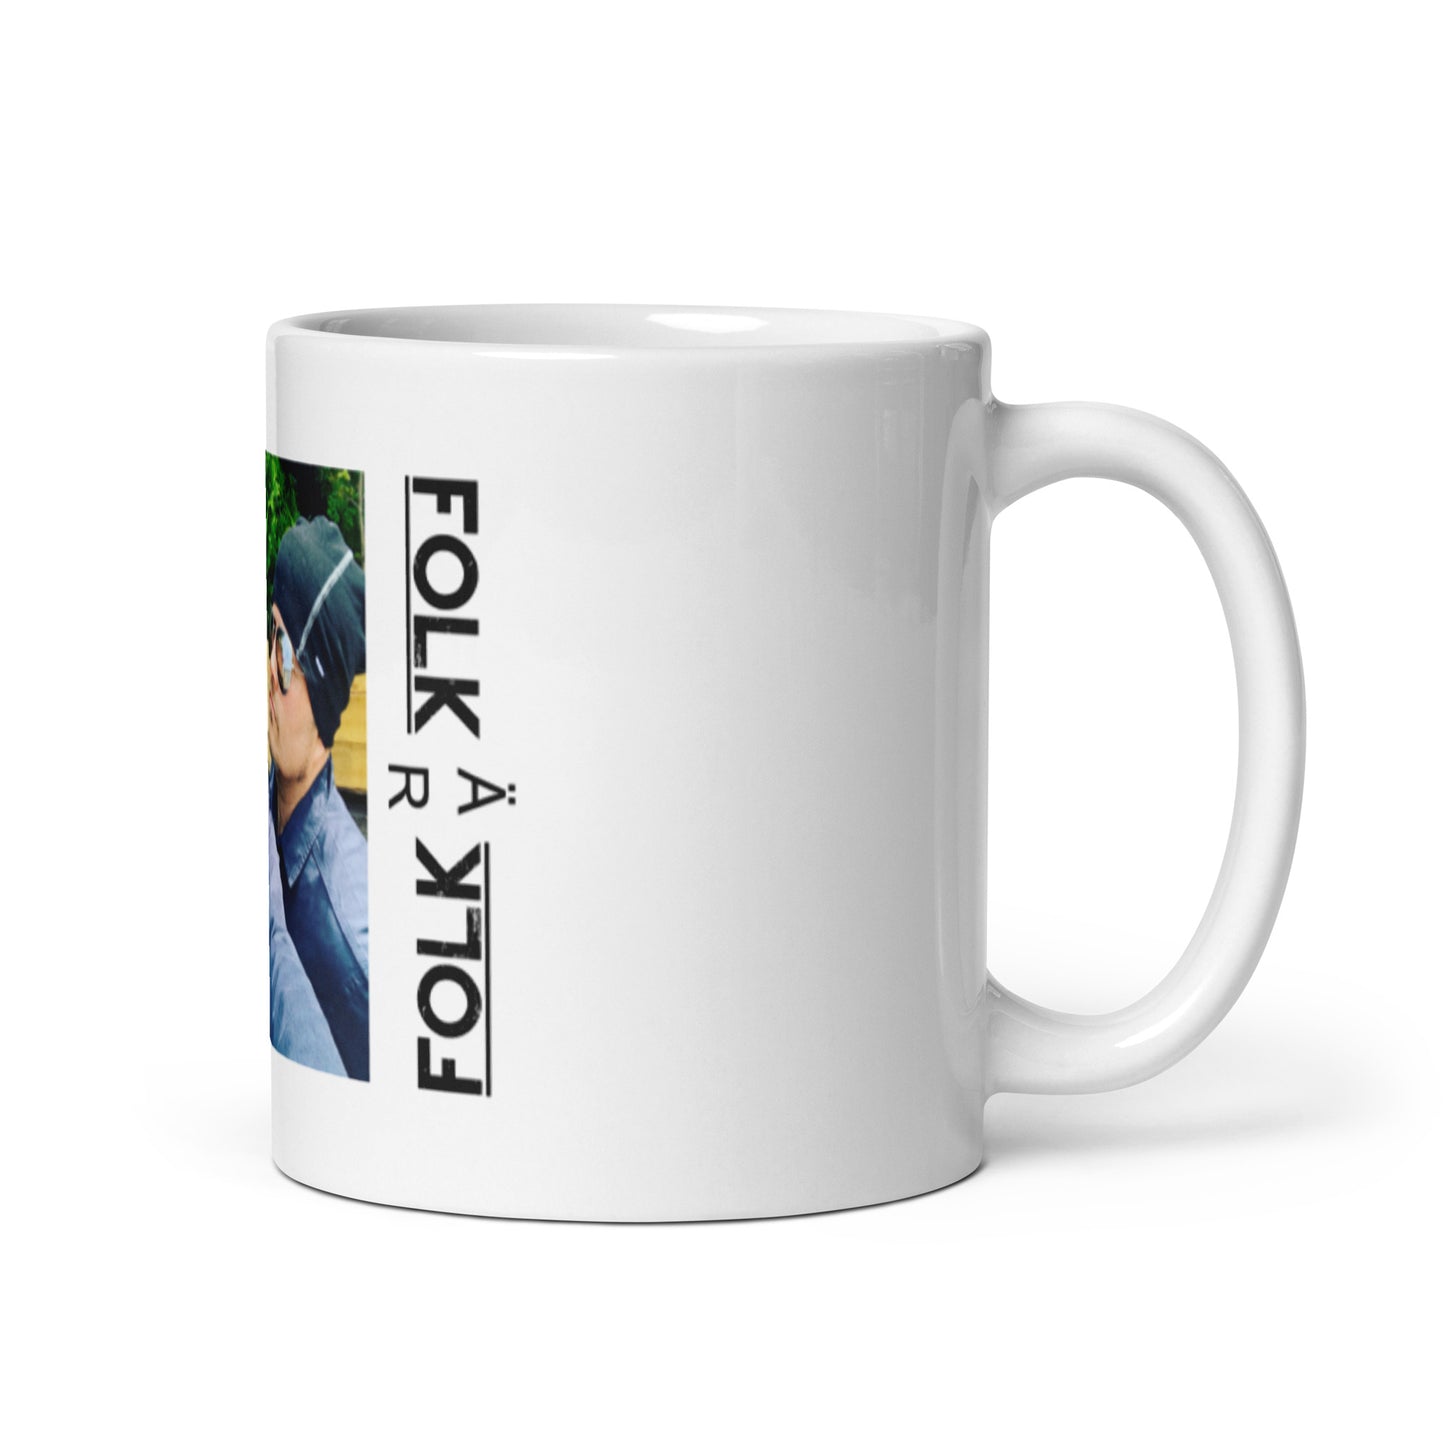 Folk Är Folk, official band photo and logo, White glossy mug